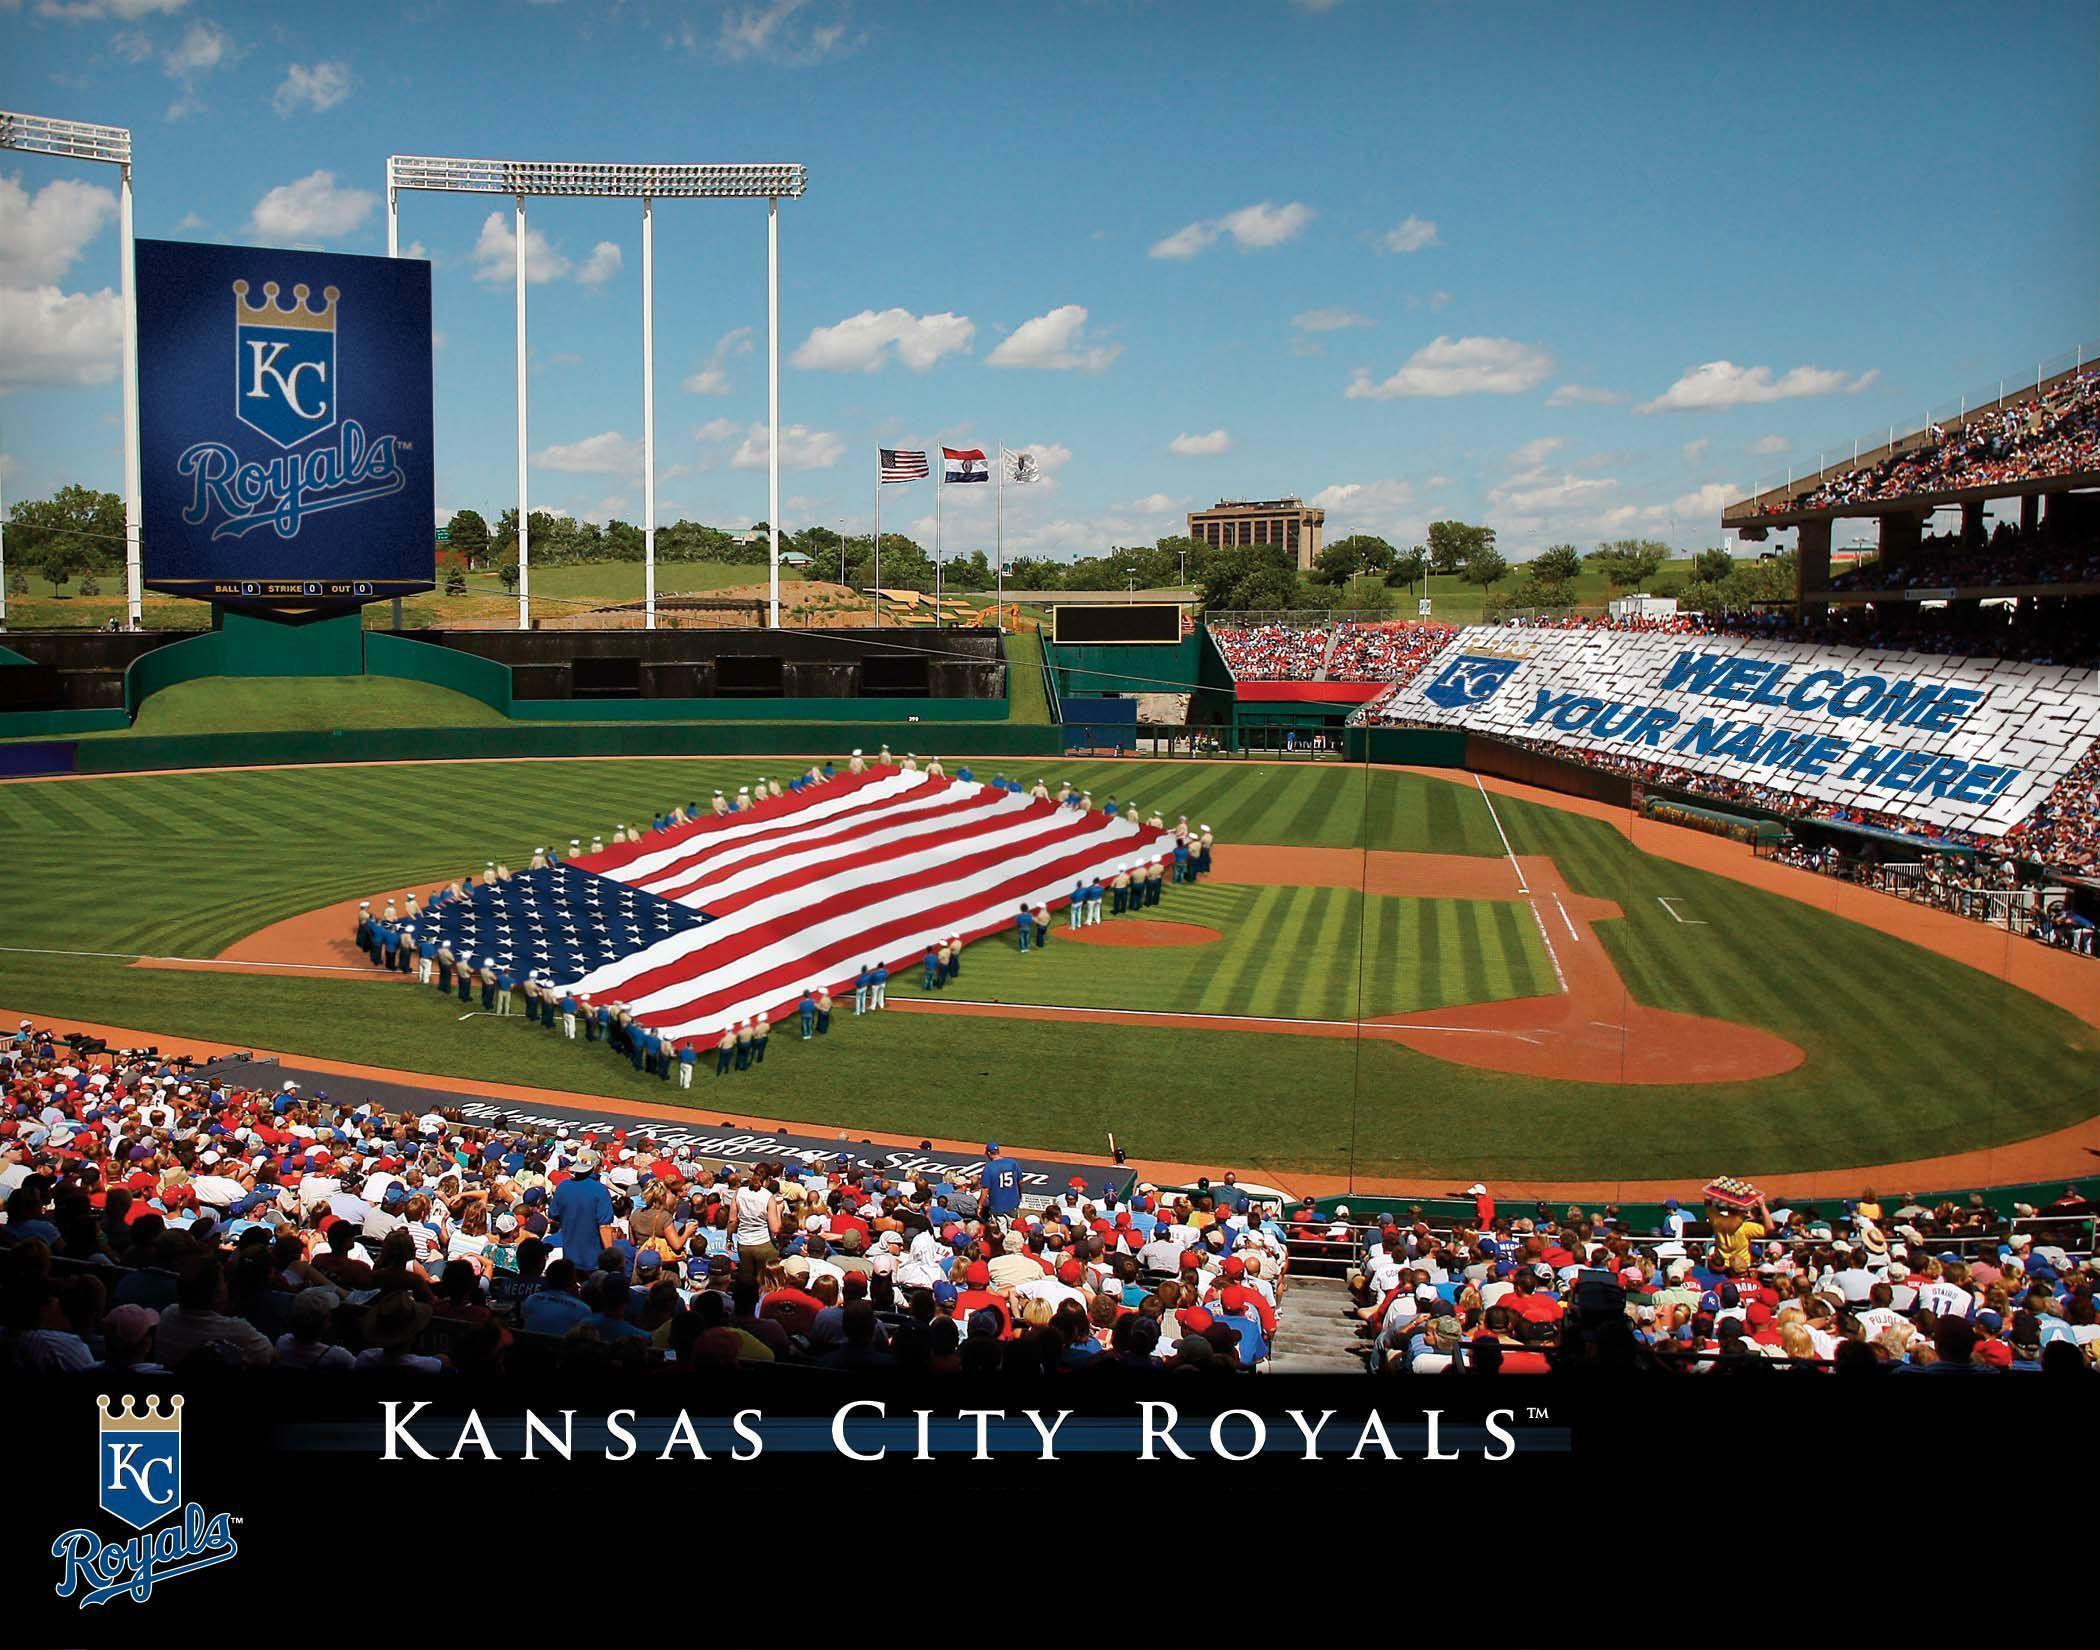 Kansas City Royals iPhone Wallpaper